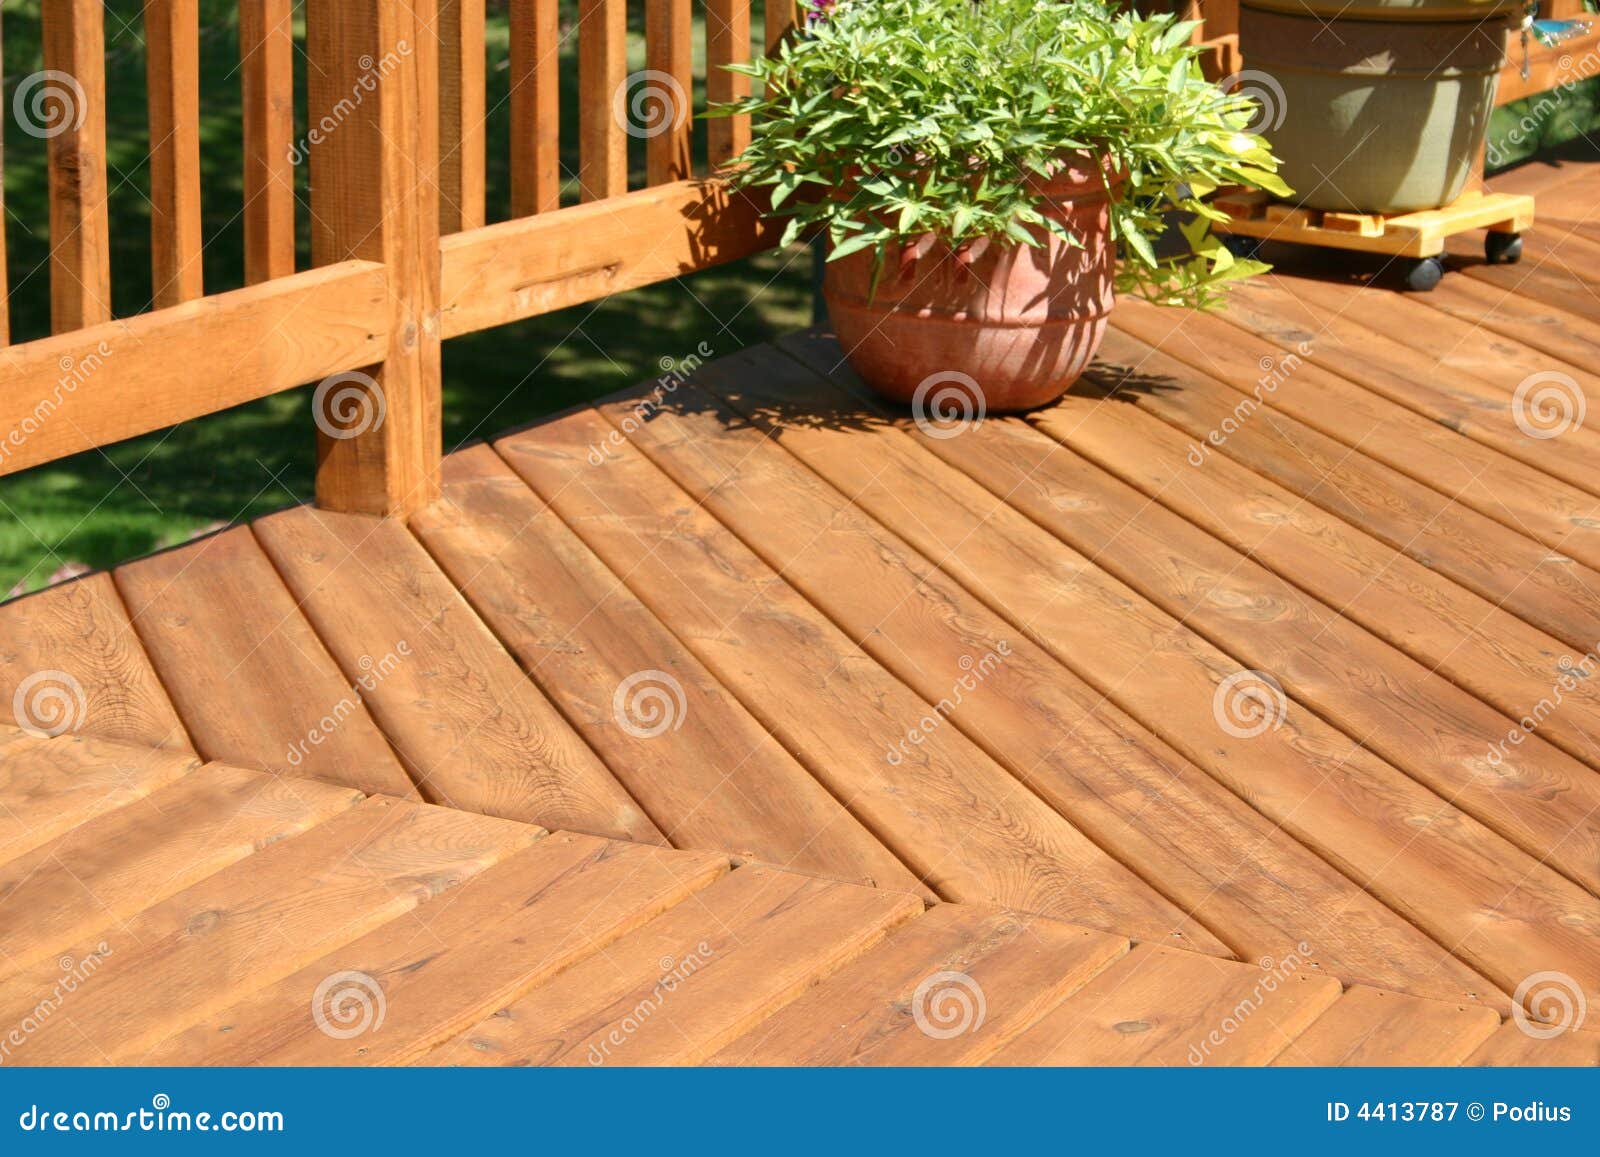 pine deck